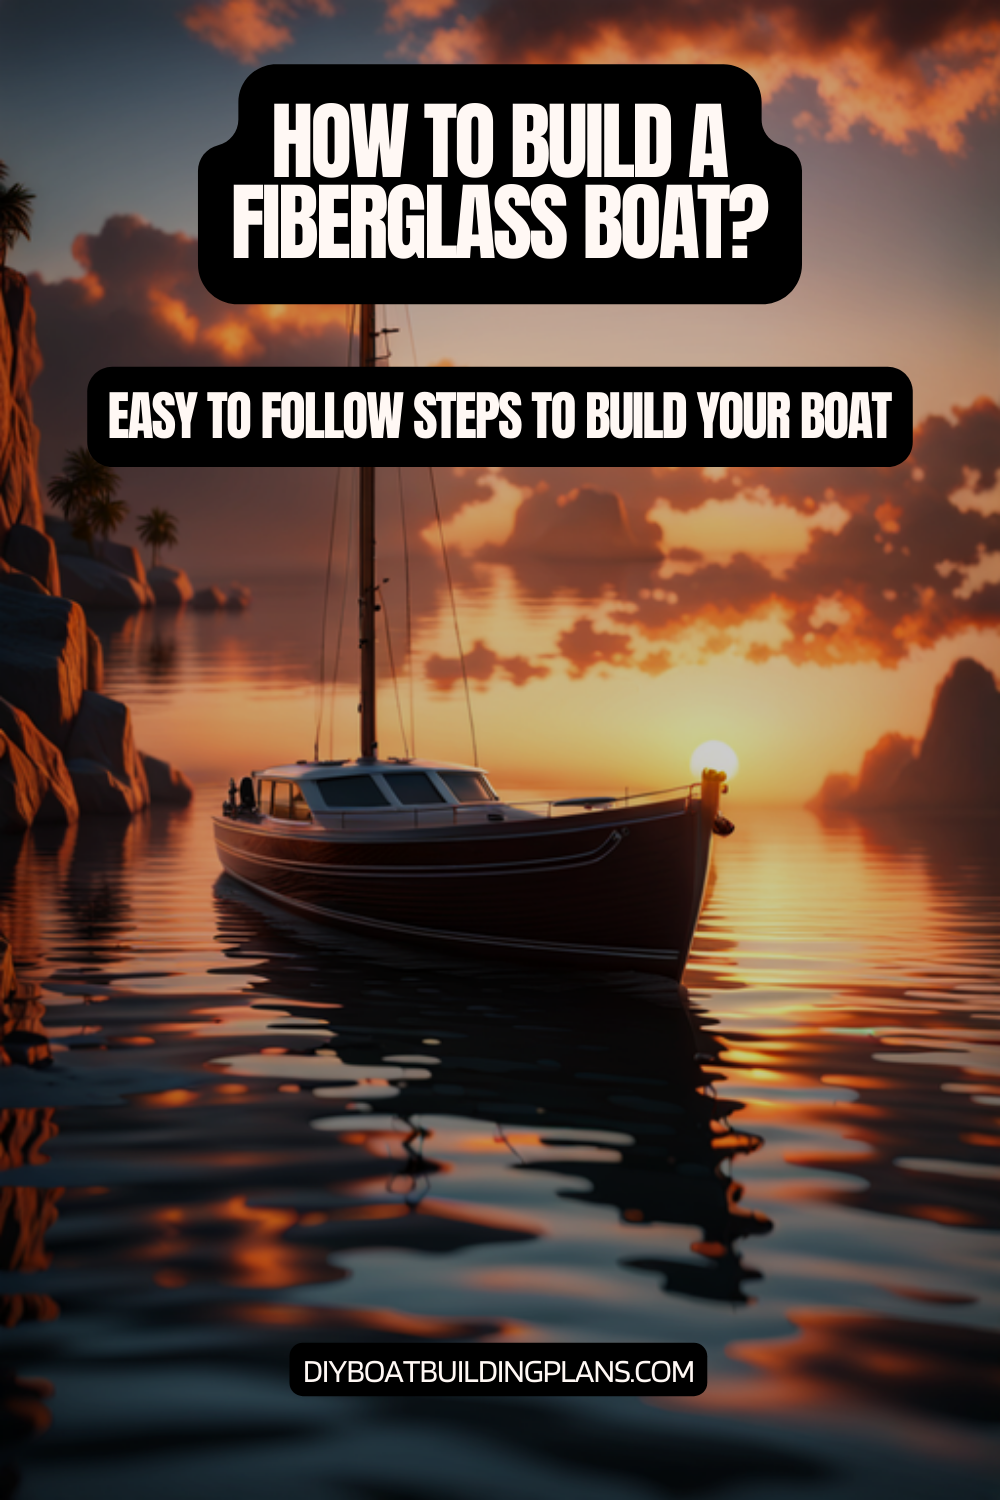 How To Build a Fiberglass Boat